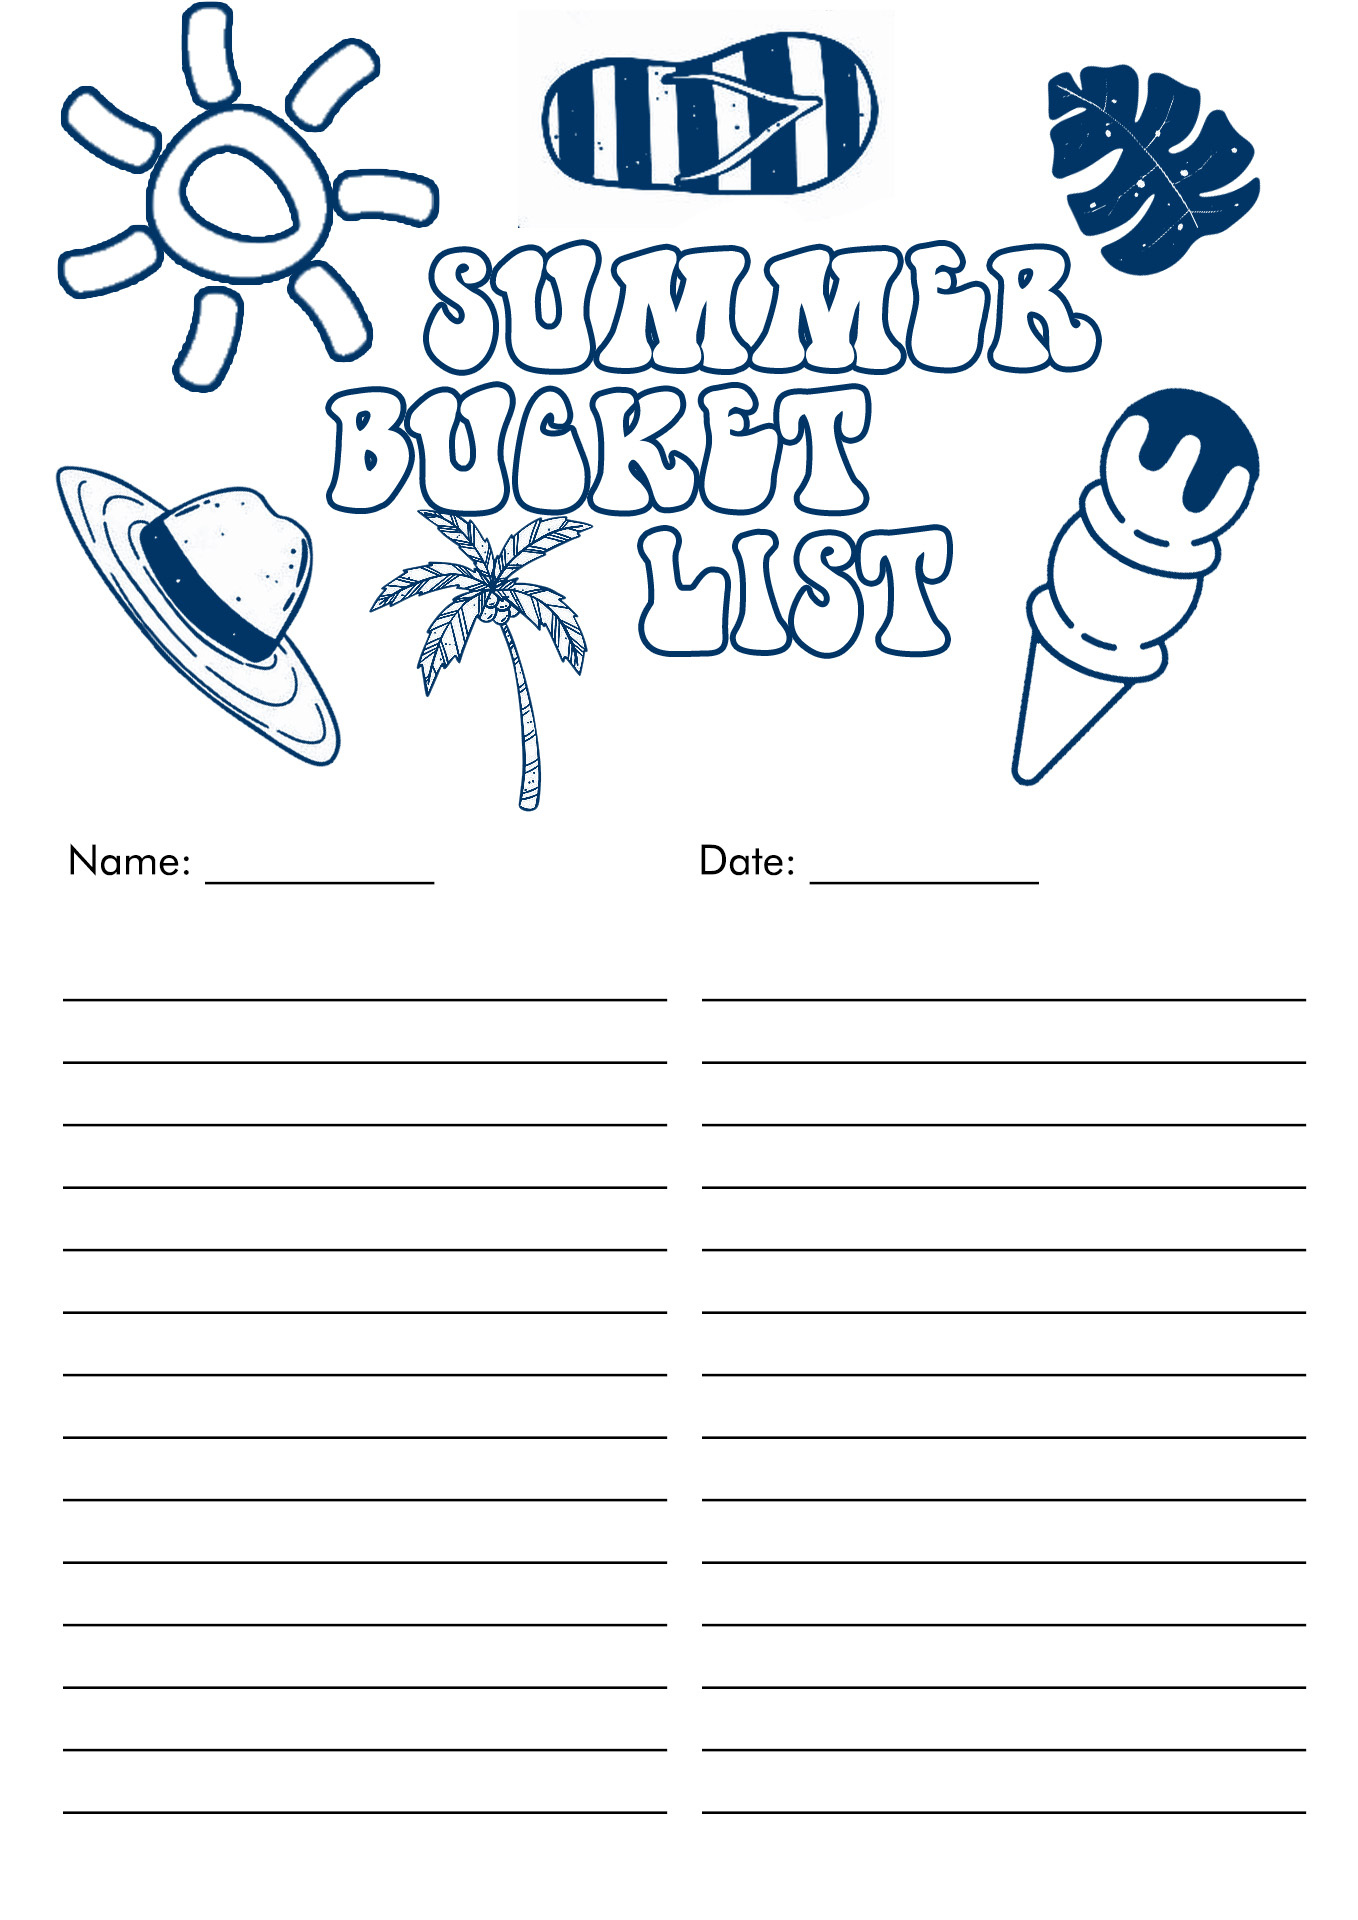 Summer Bucket List Worksheets Image